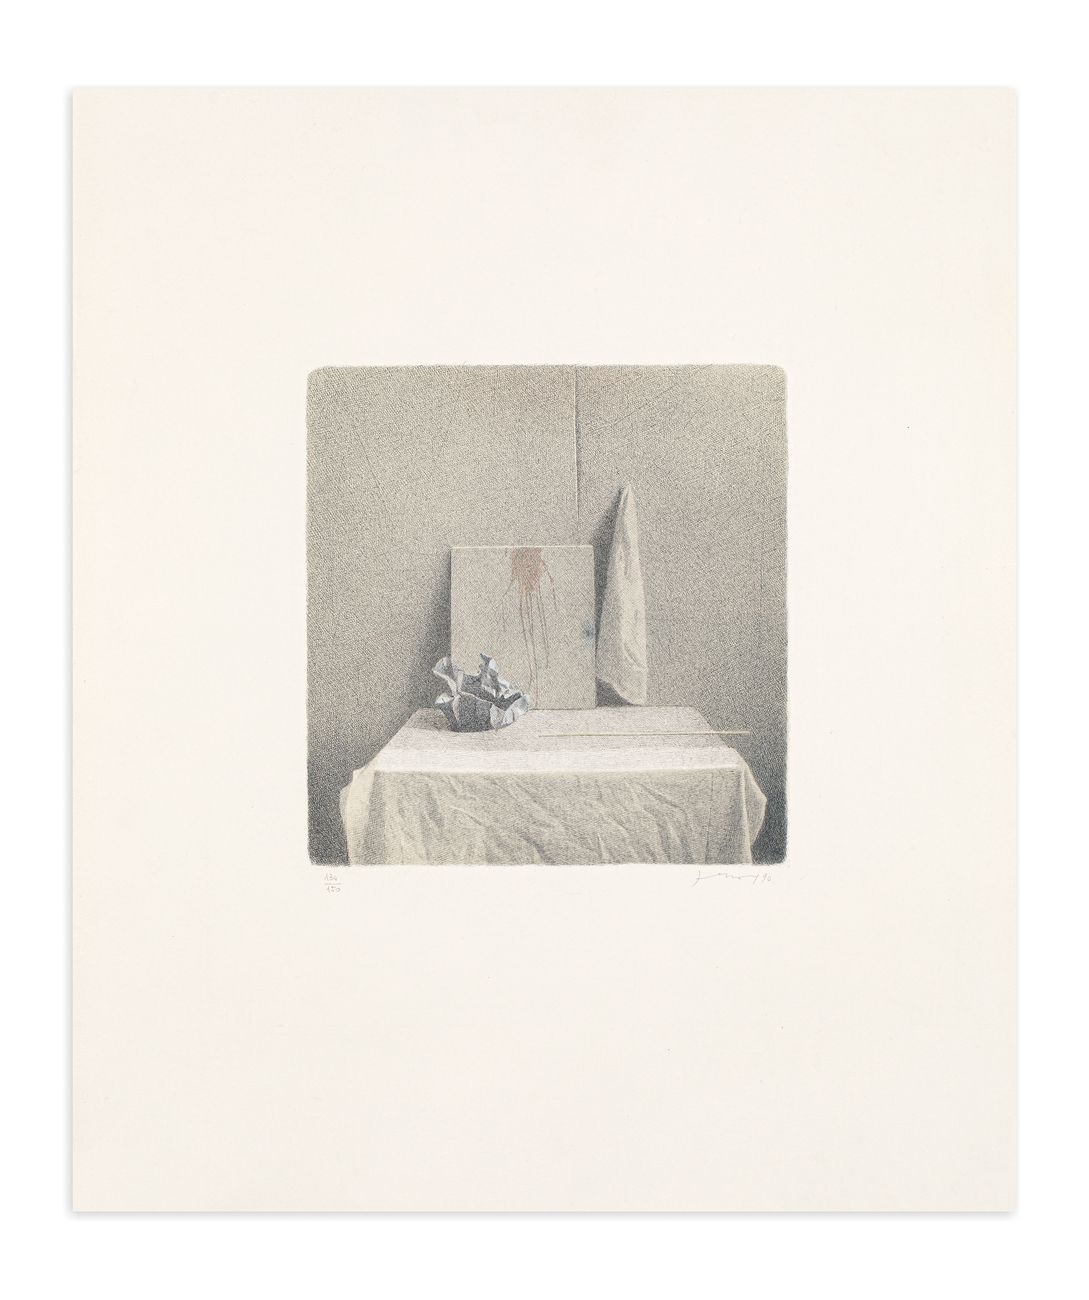 GIANFRANCO FERRONI (1927-2001) - Composizione, 1990 石版画

60x50厘米

正面有铅笔签名、日期和编号（&hellip;